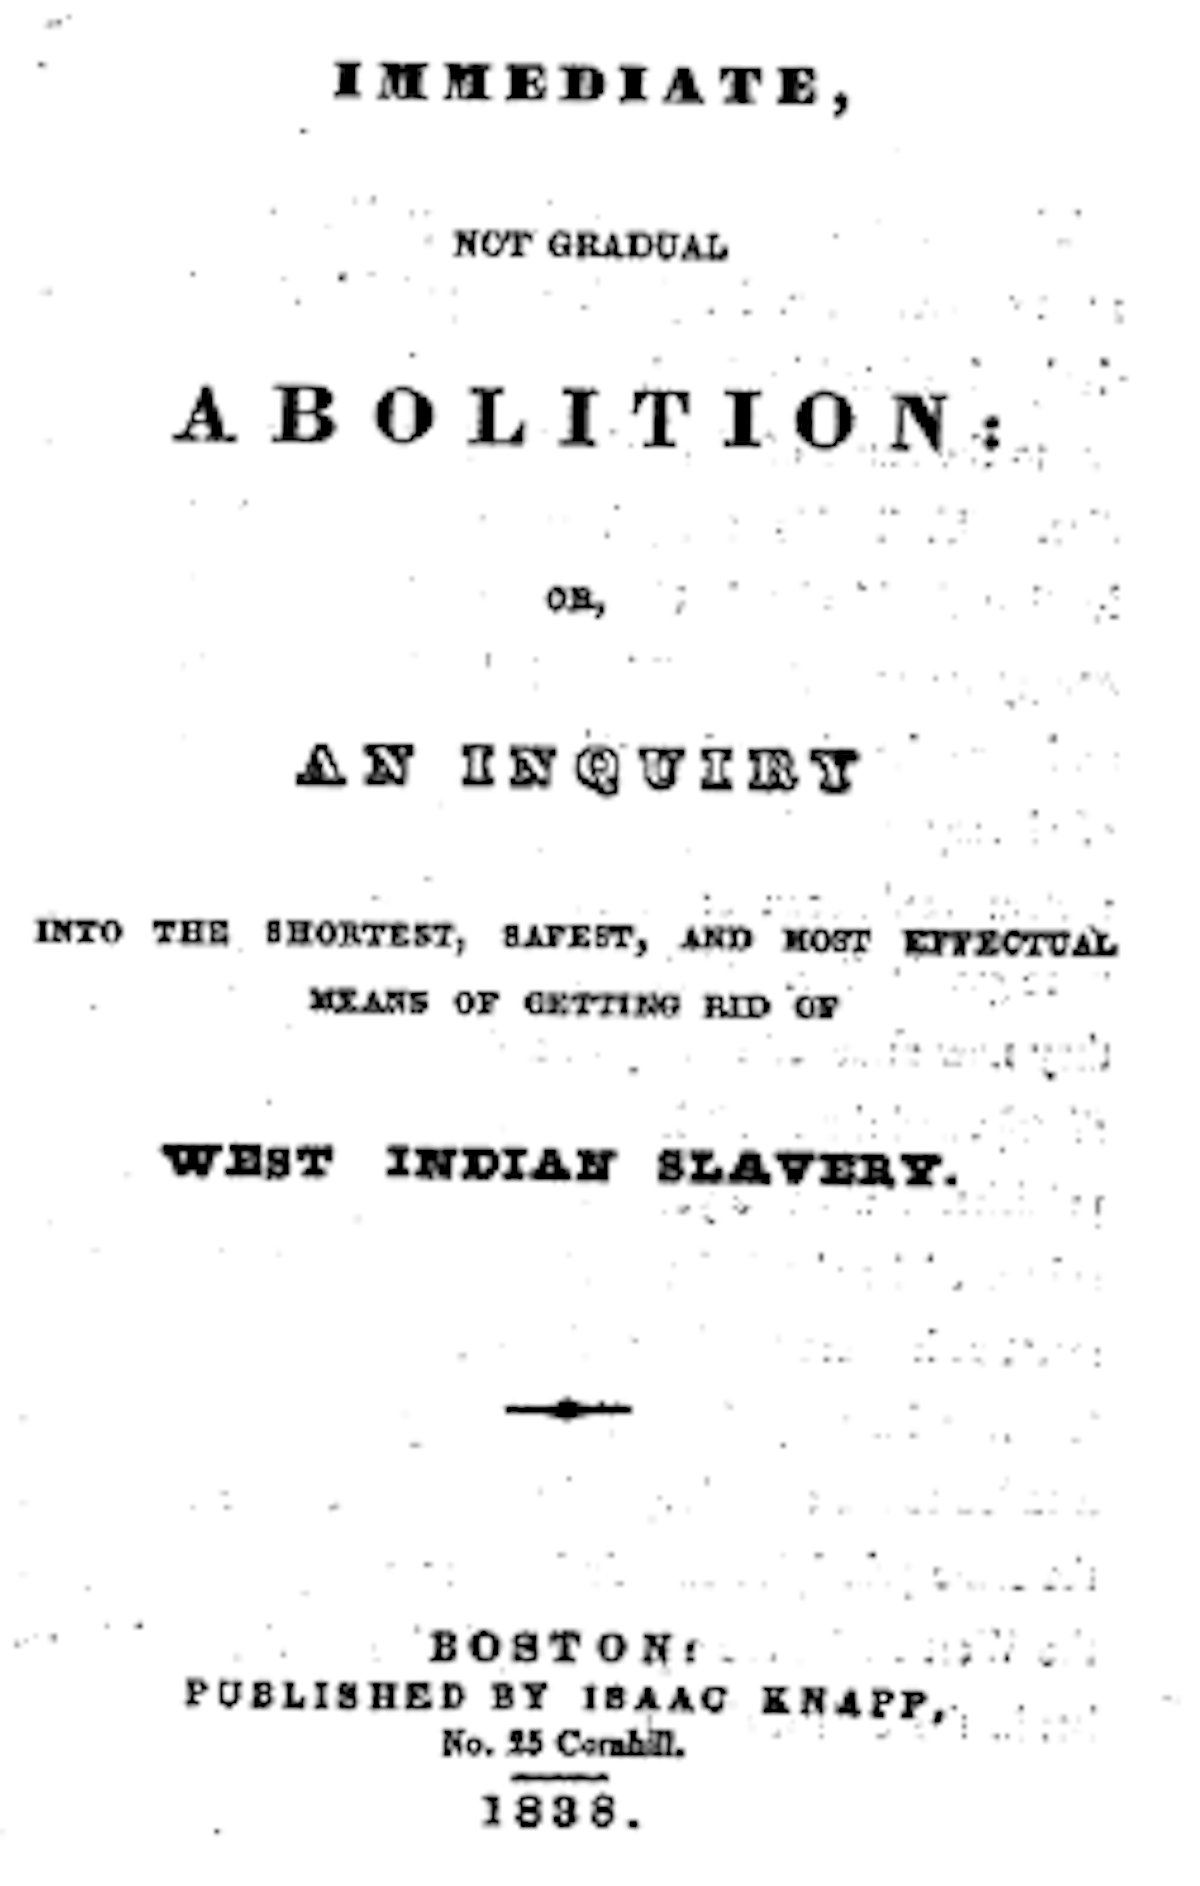 Heyrick's 1824 pamphlet.